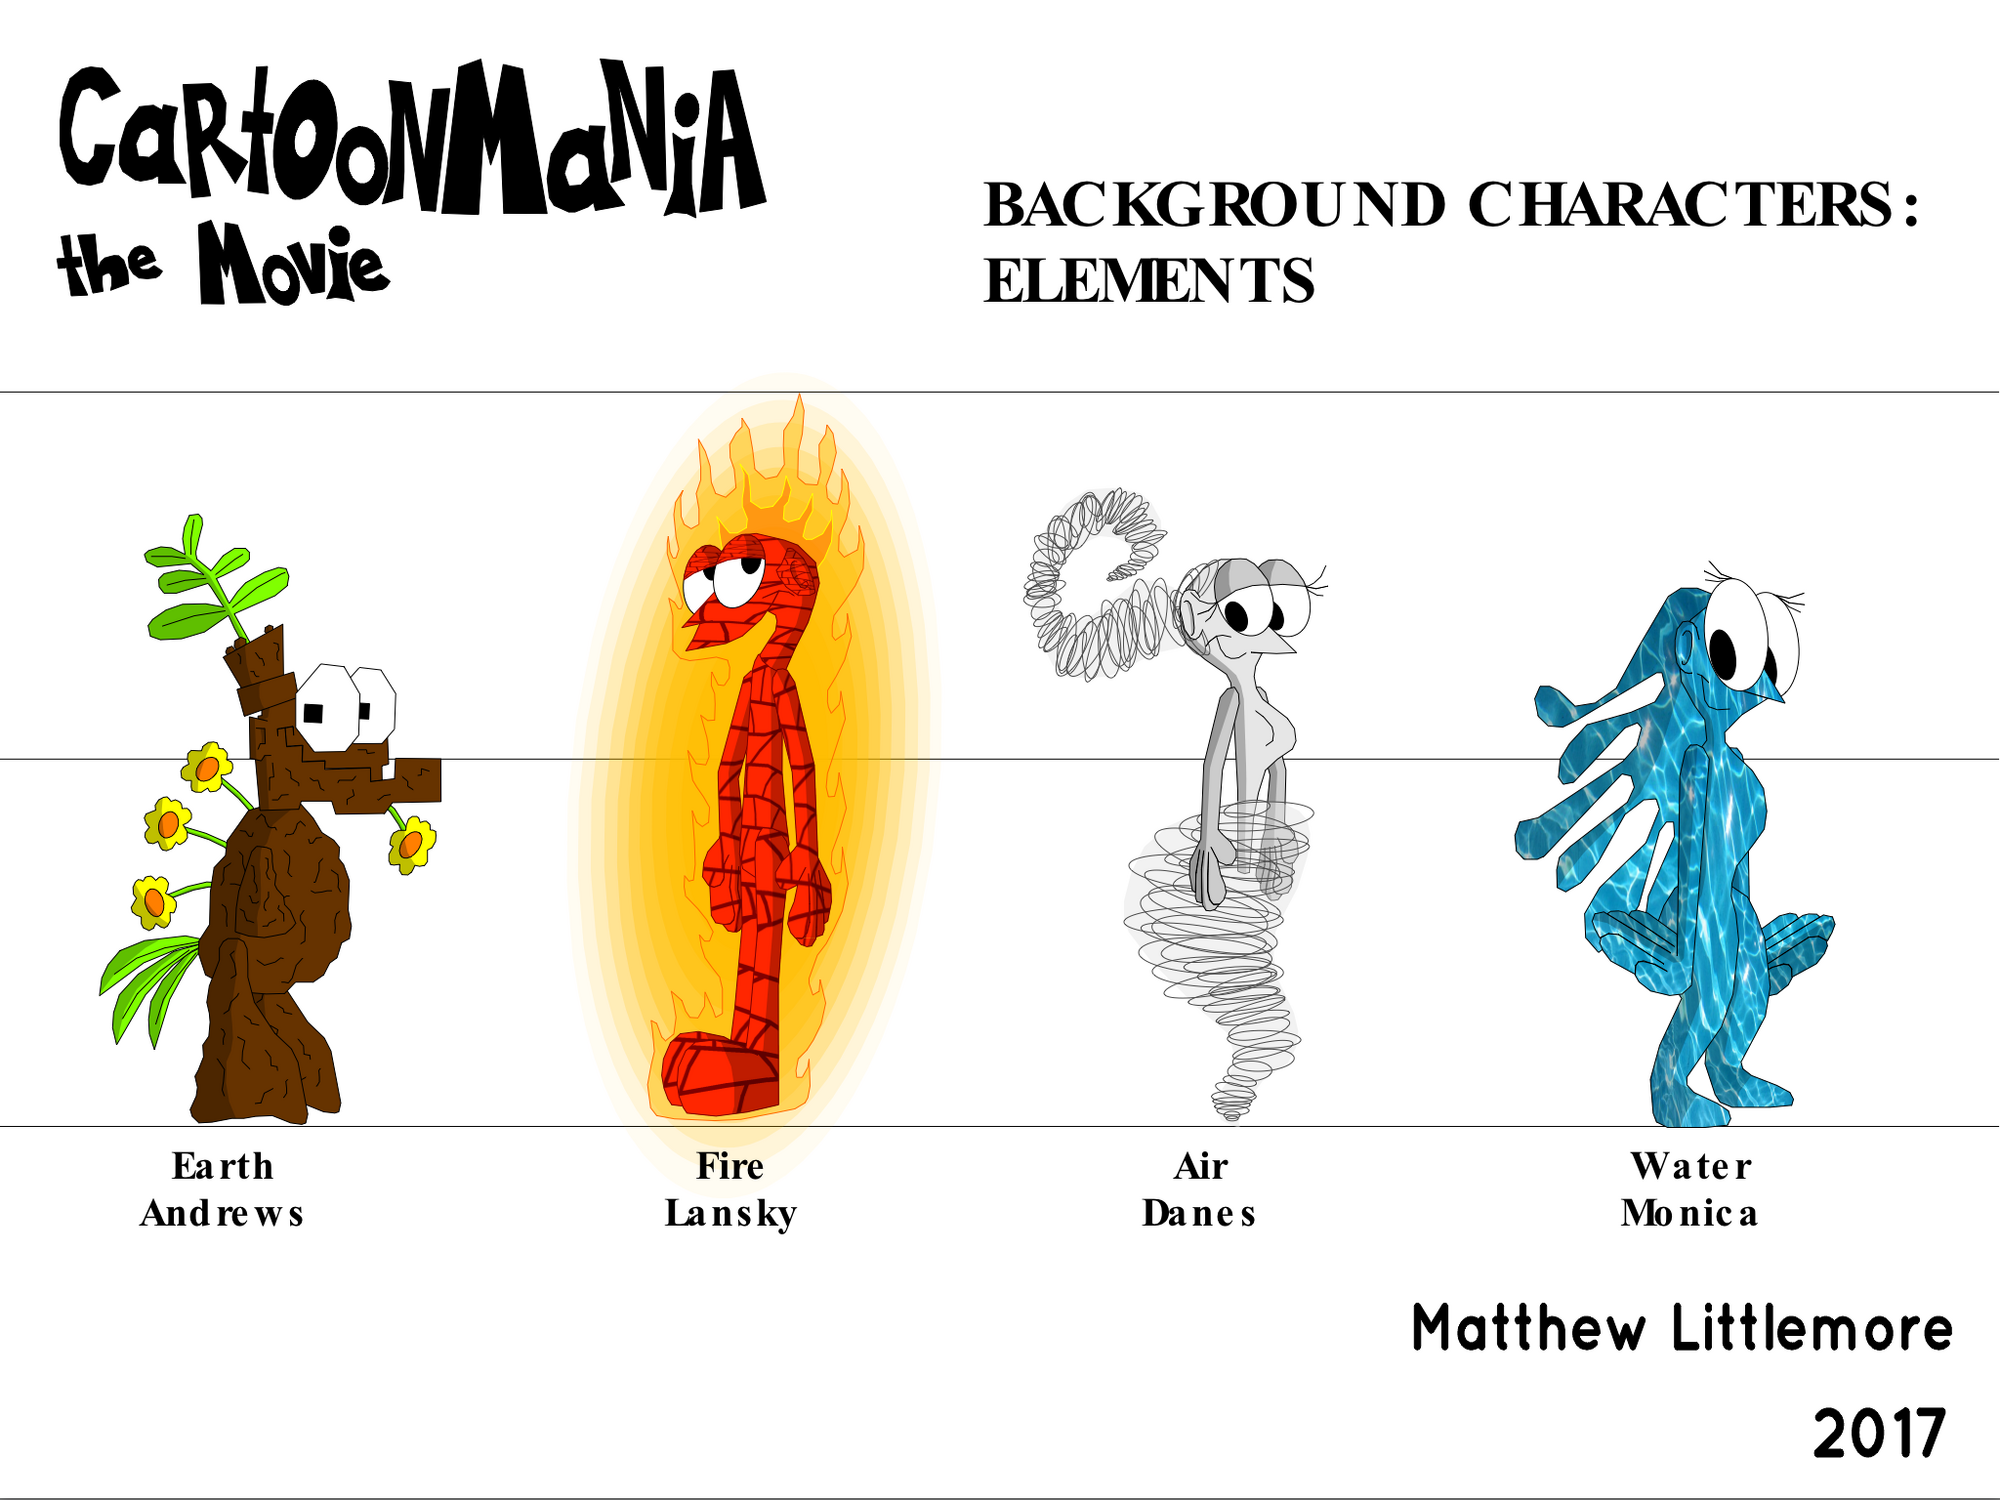 The Elements | CartoonMania320 Wiki | Fandom